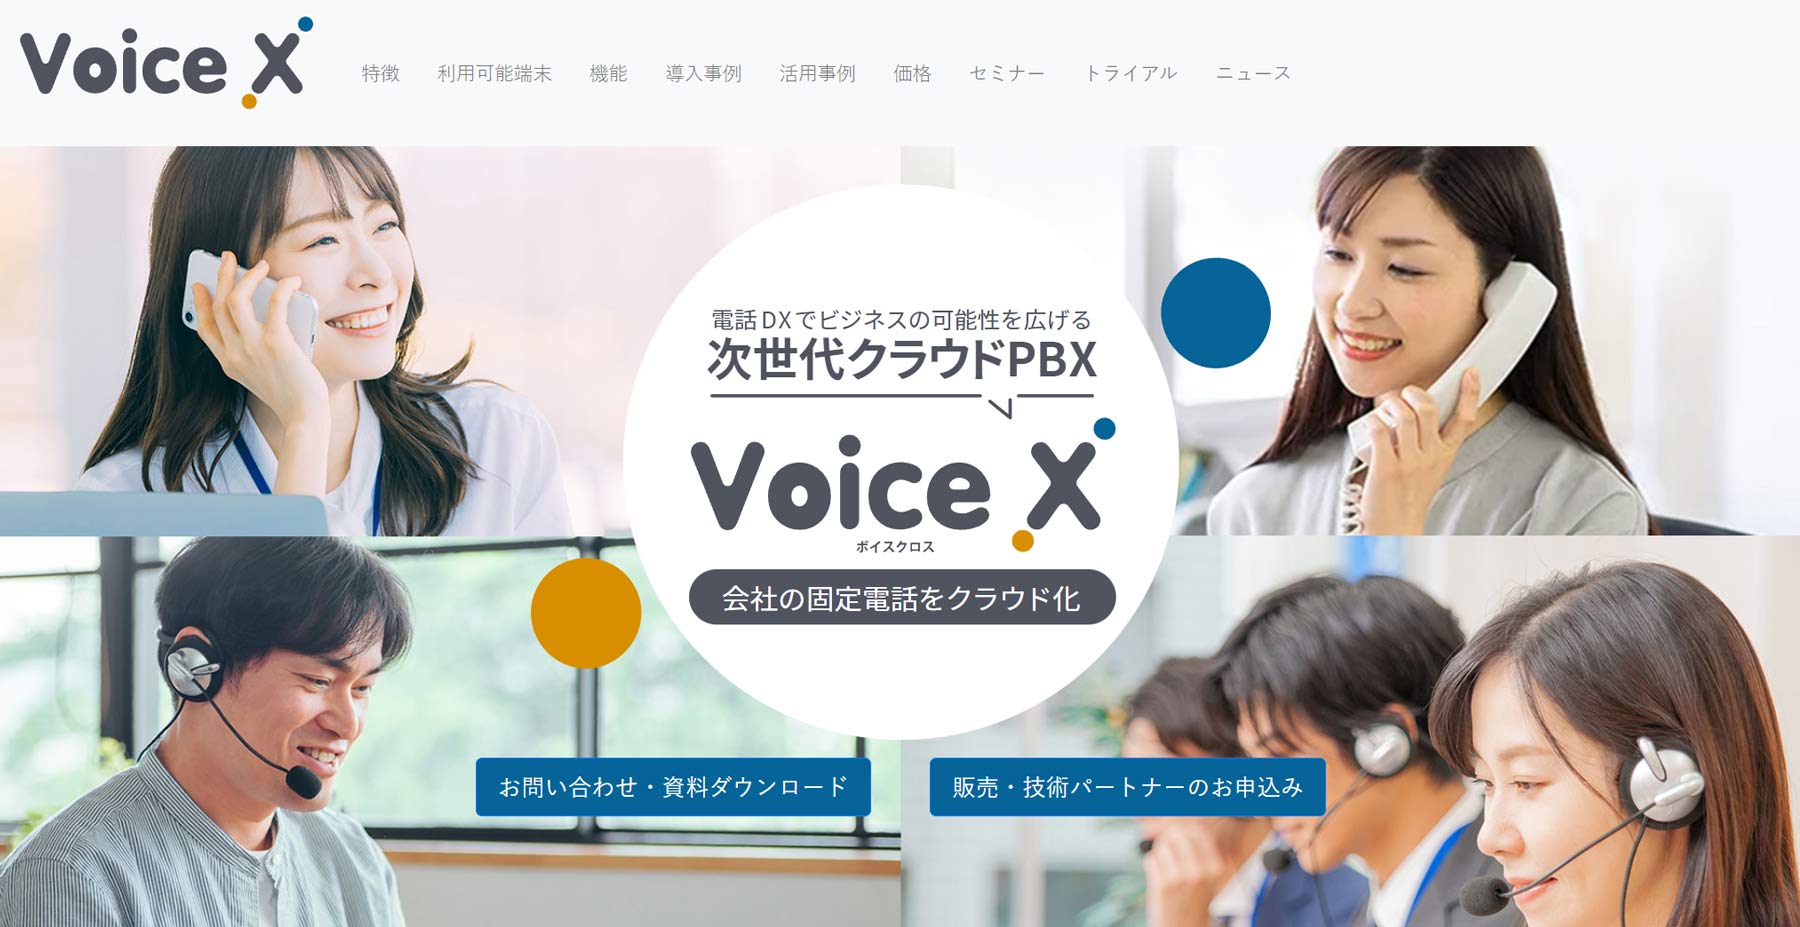 Voice X公式Webサイト